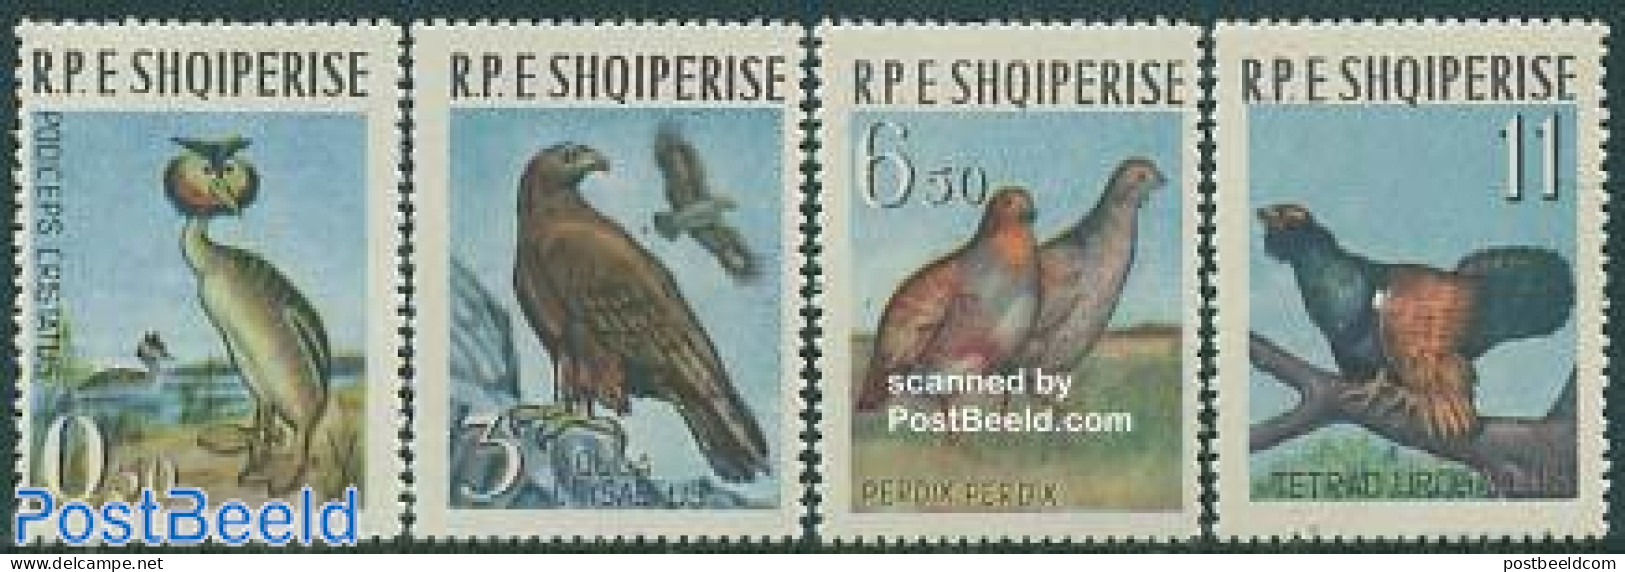 Albania 1963 Birds 4v, Mint NH, Nature - Birds - Birds Of Prey - Albanie